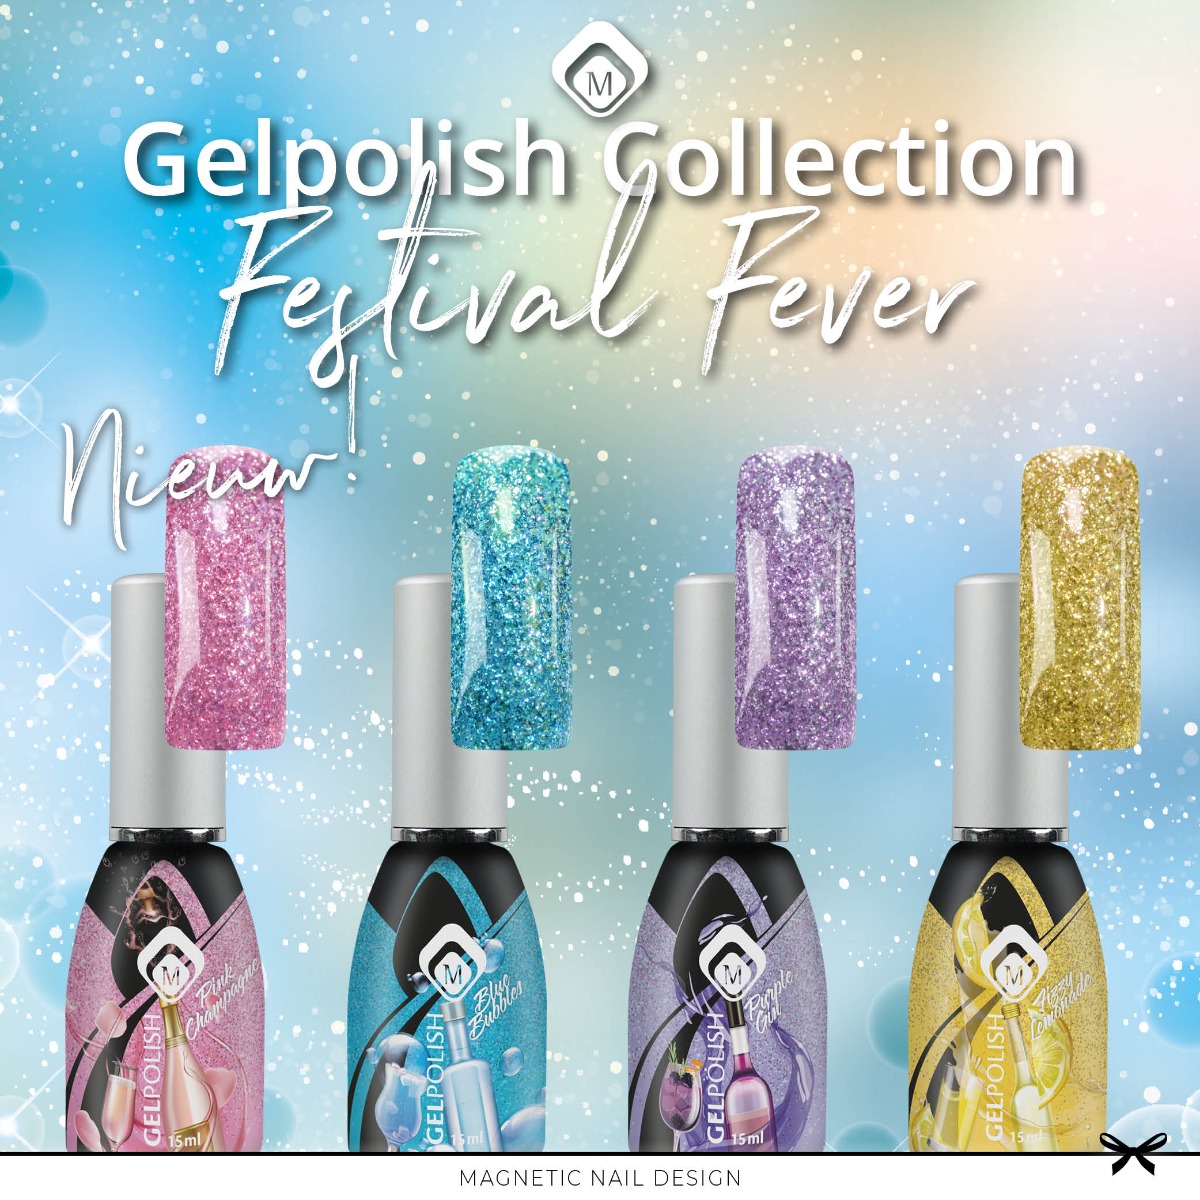 Festival Fever Gelpolish Collectie